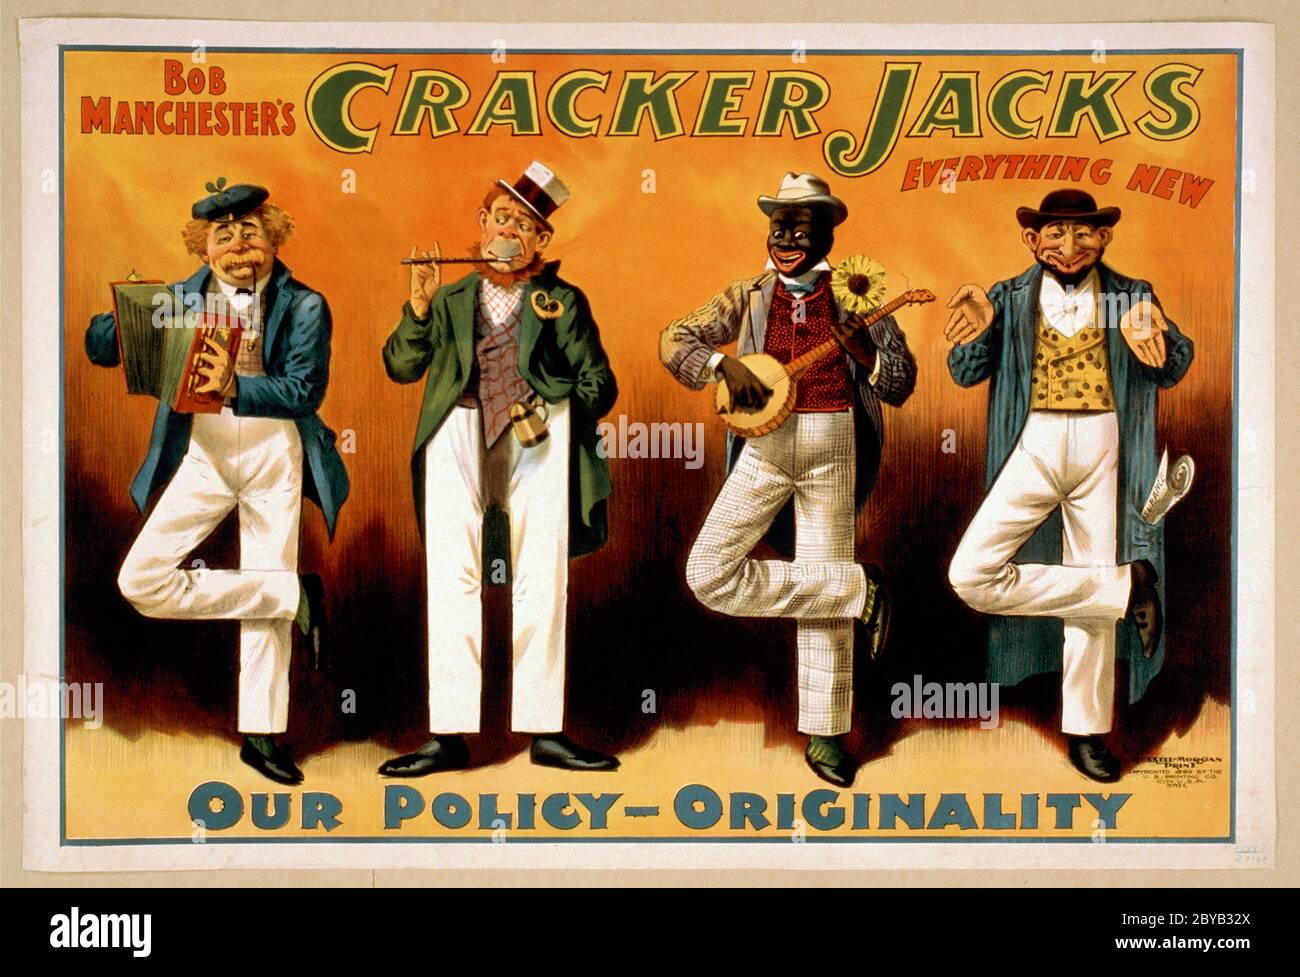 Bob Manchester's Cracker Jacks, Our Policy - Originality, Vaudeville Poster, Russell-Morgan Print, U.S. Printing Co., Cin. USA, 1899 Stock Photo